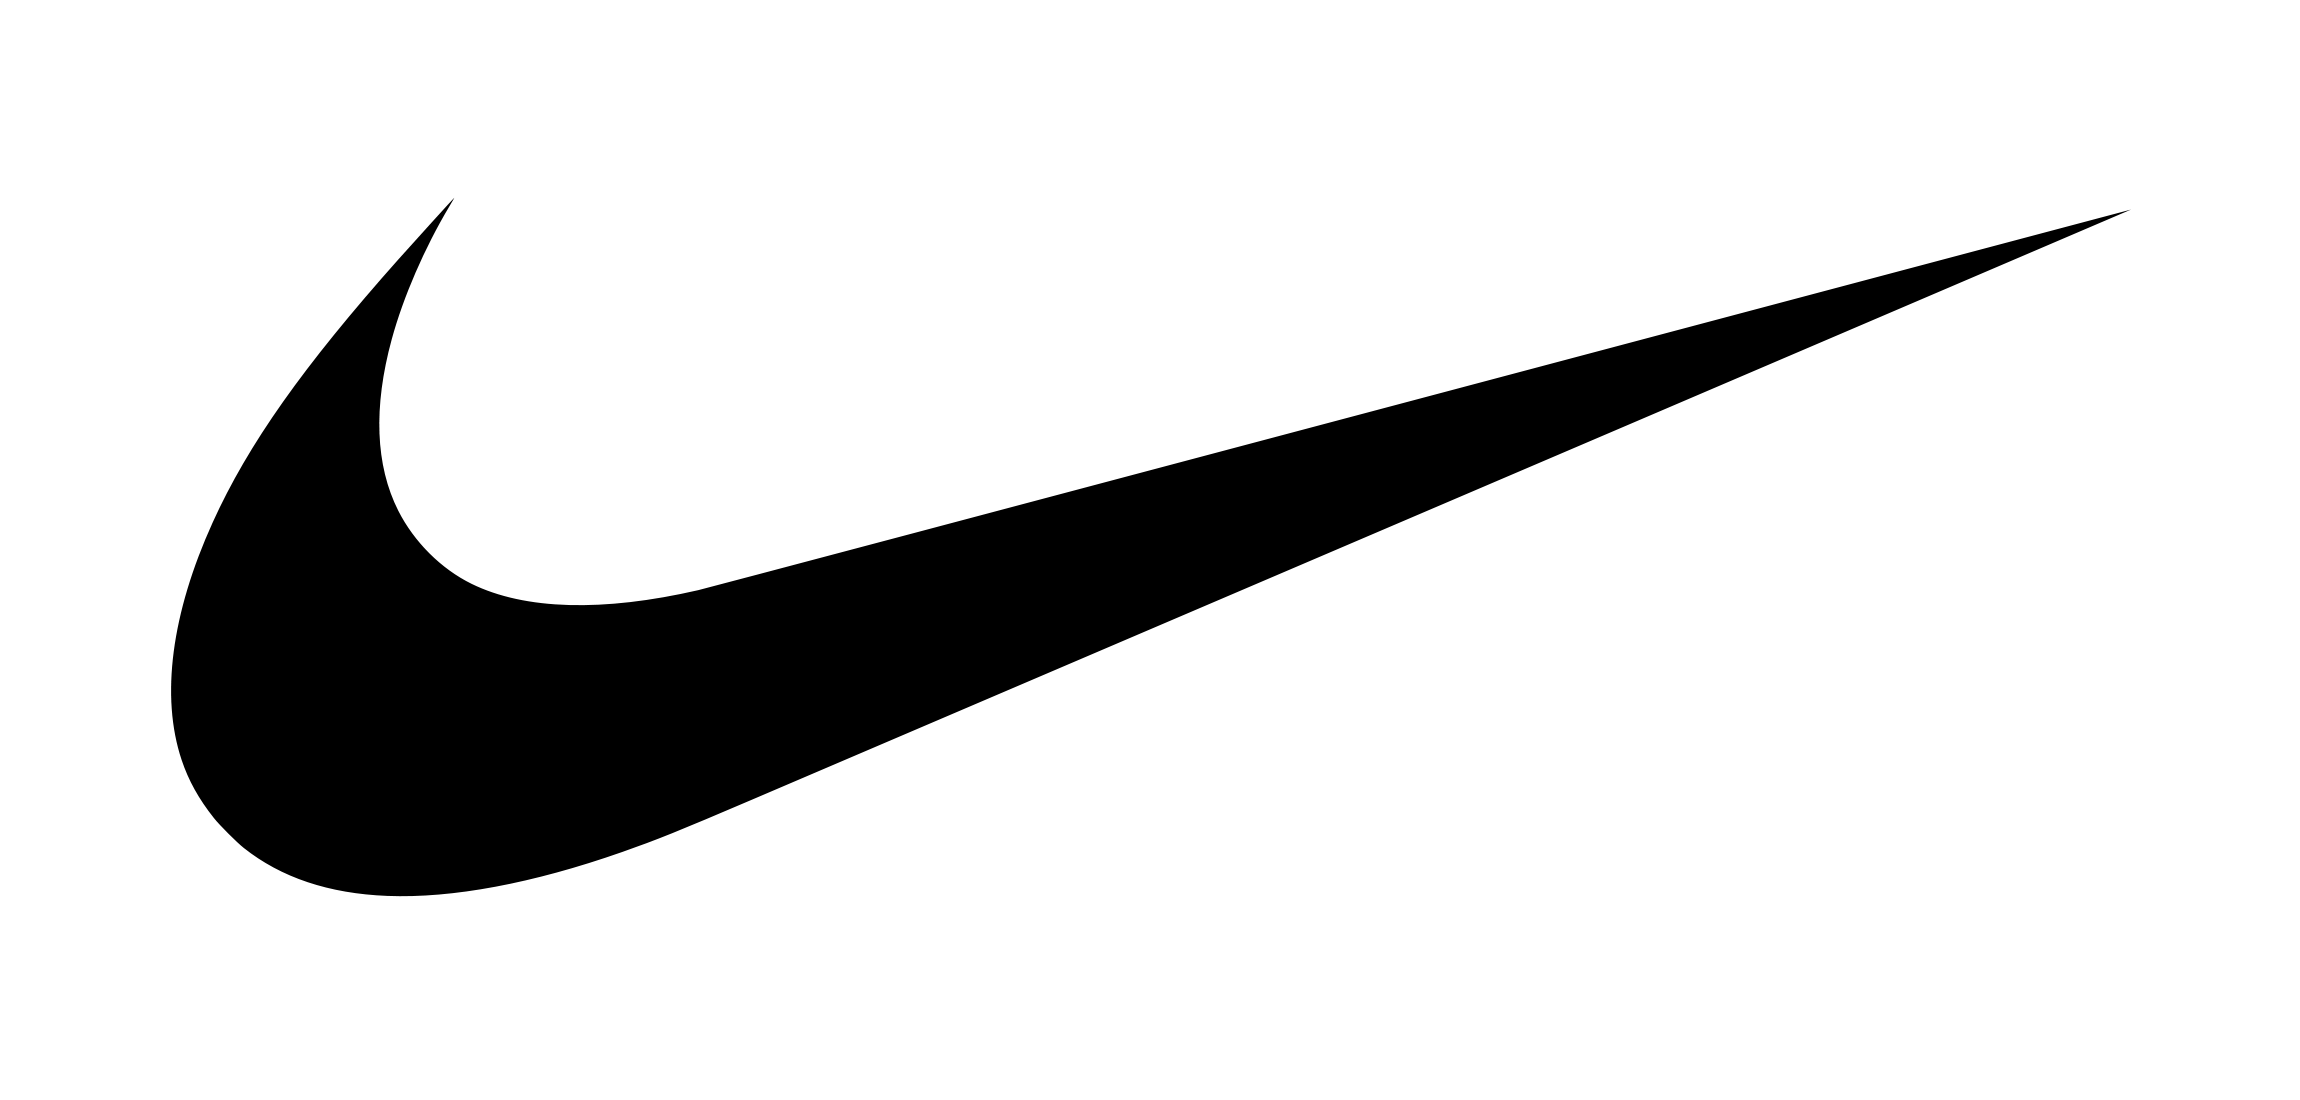 Dark Red Nike Logo - Nike Logo, Nike Symbol Meaning, History and Evolution